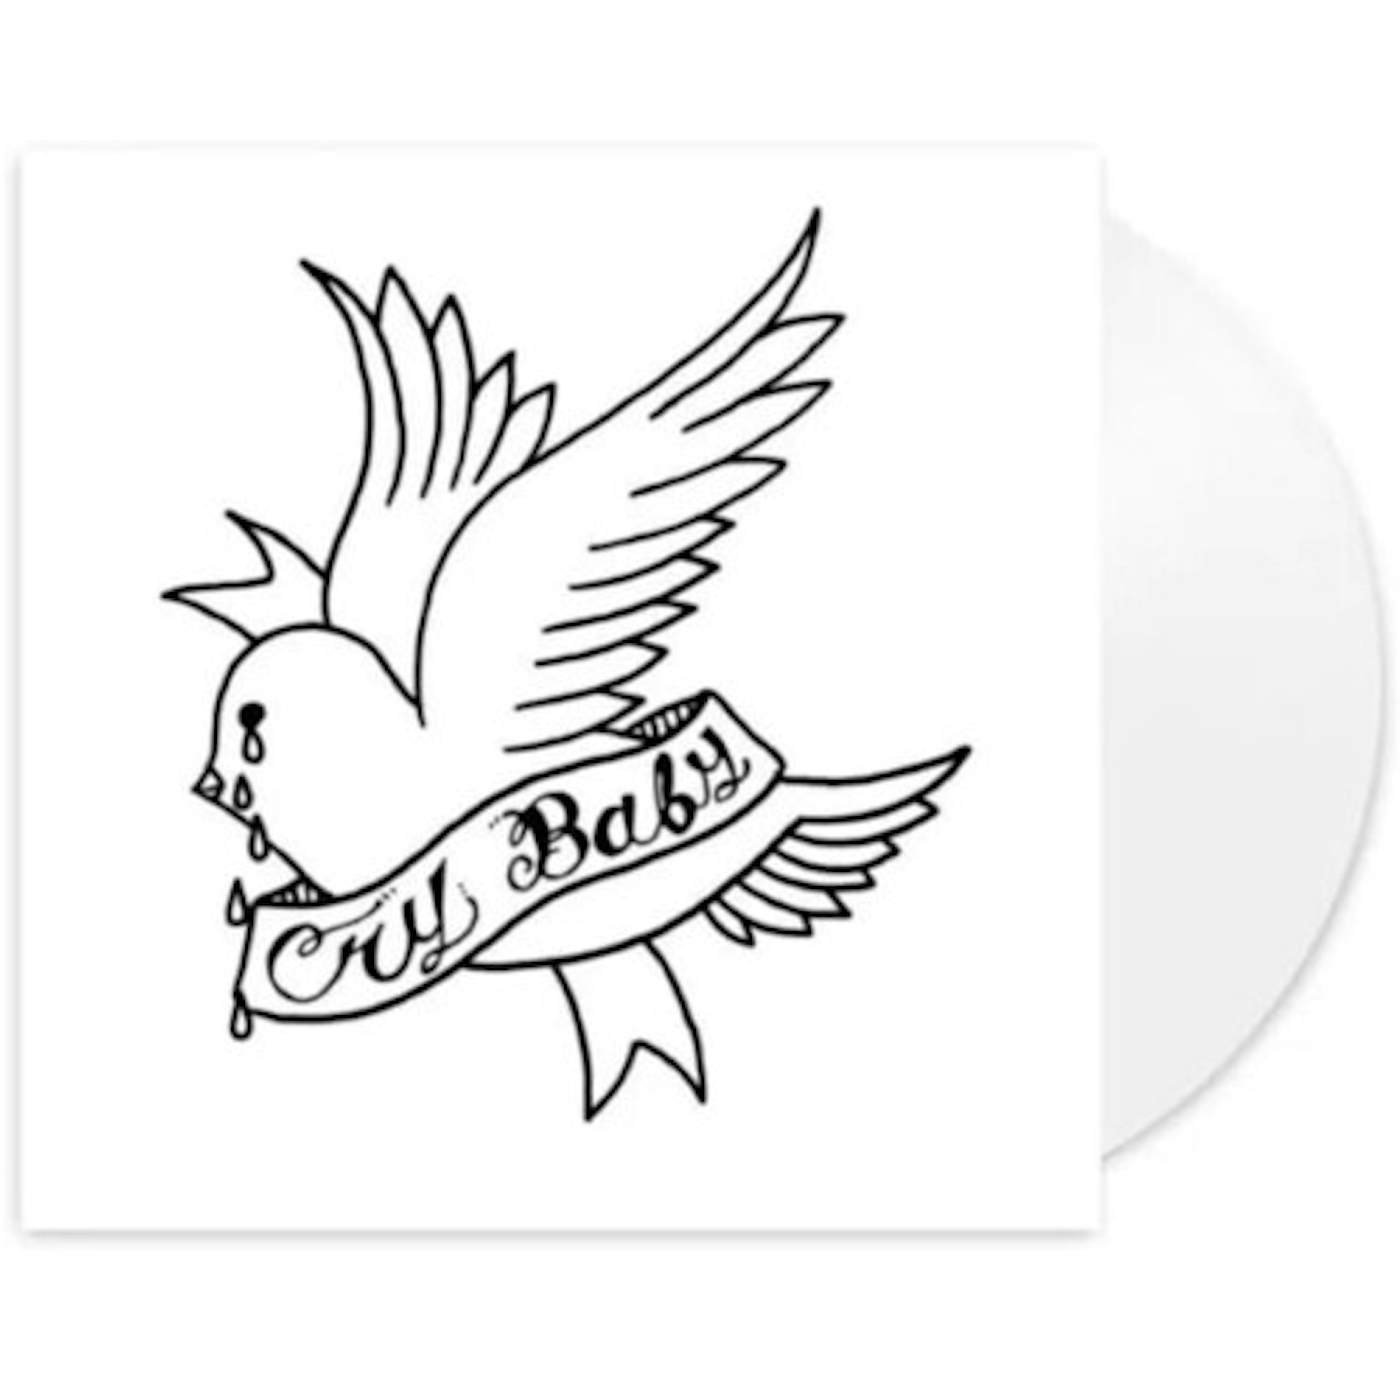 Lil Peep Crybaby (White) Vinyl Record